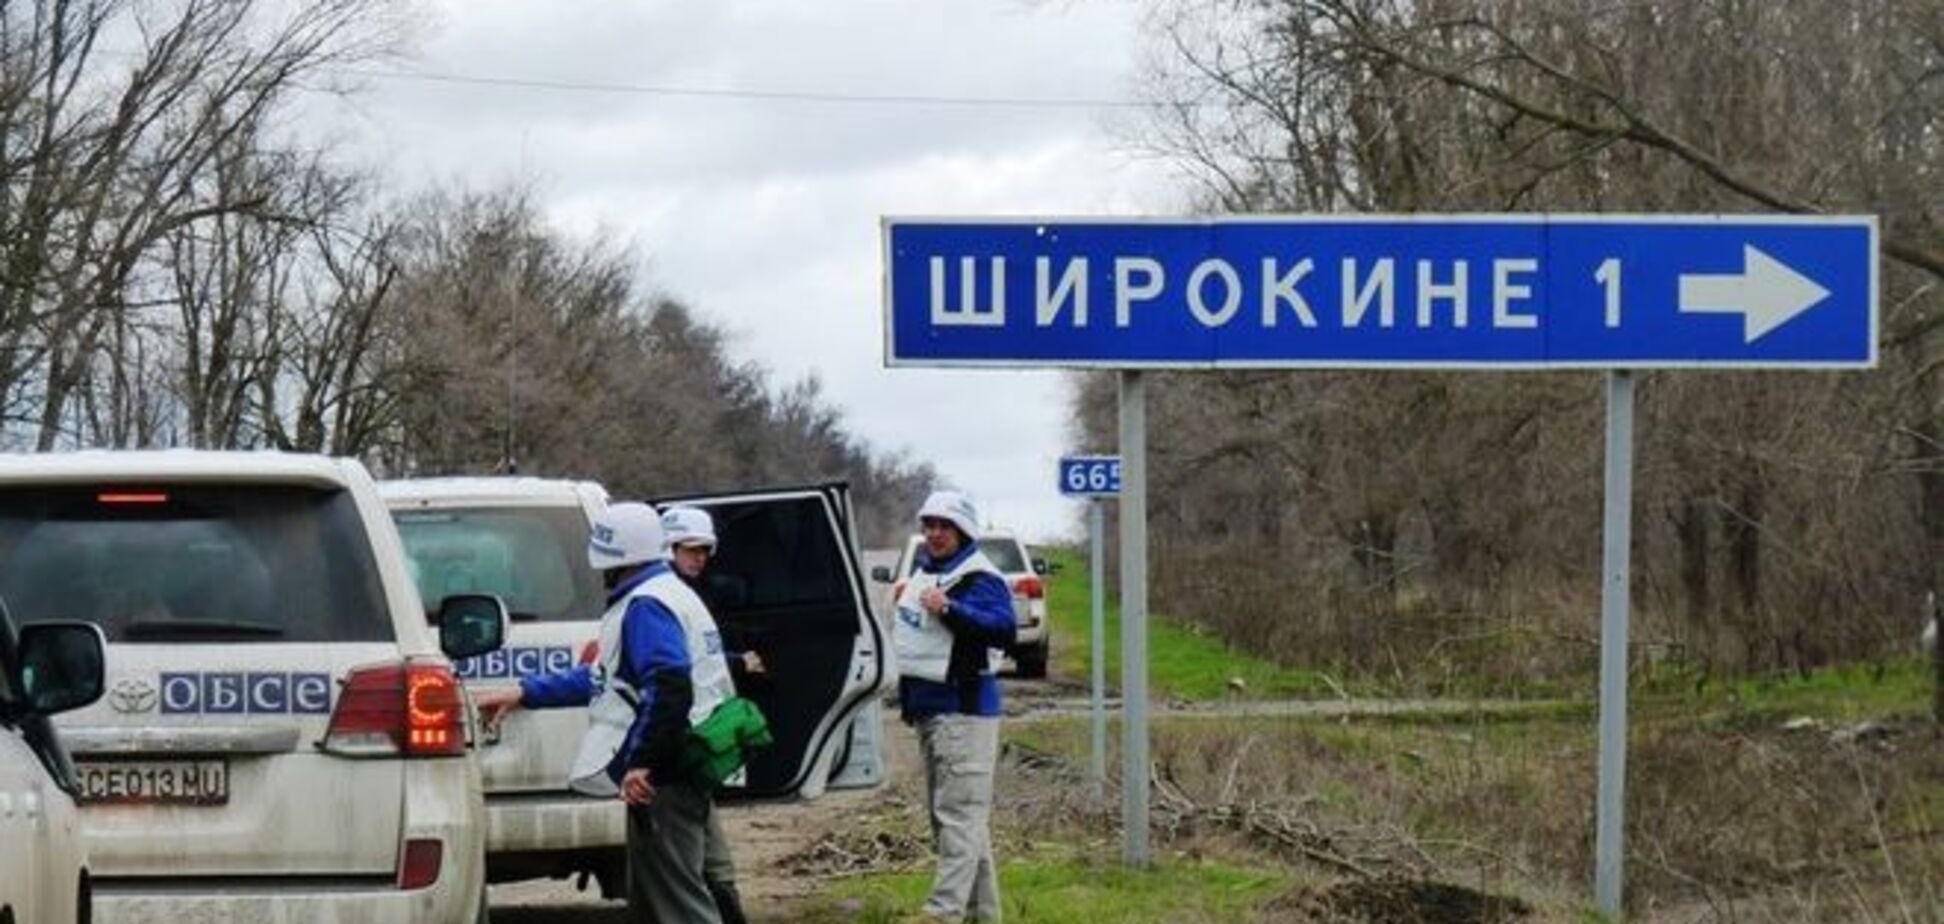 Терористи 'ДНР' покинули Широкине